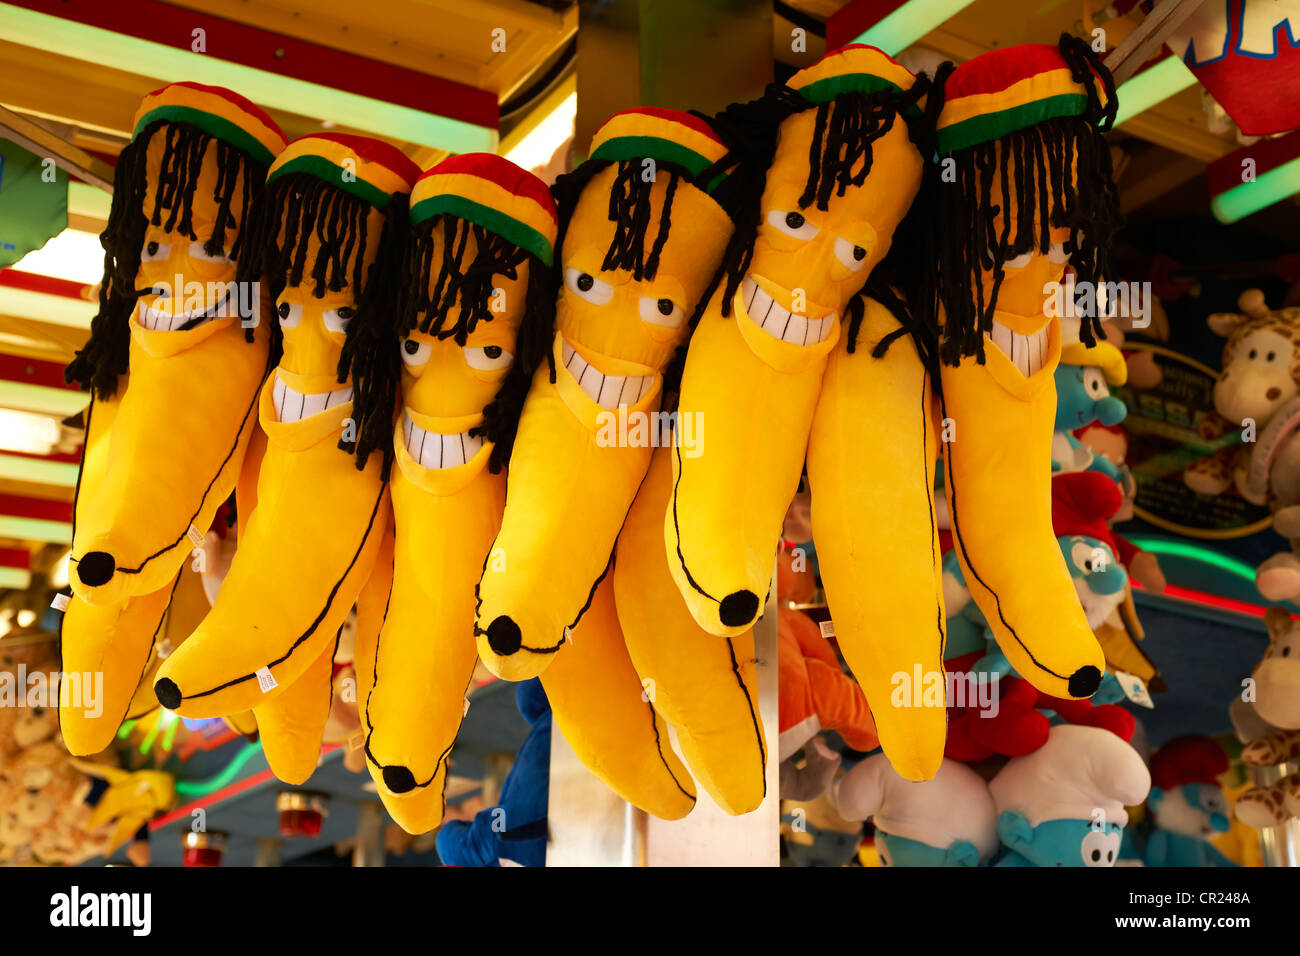 rasta banana stuffed animal